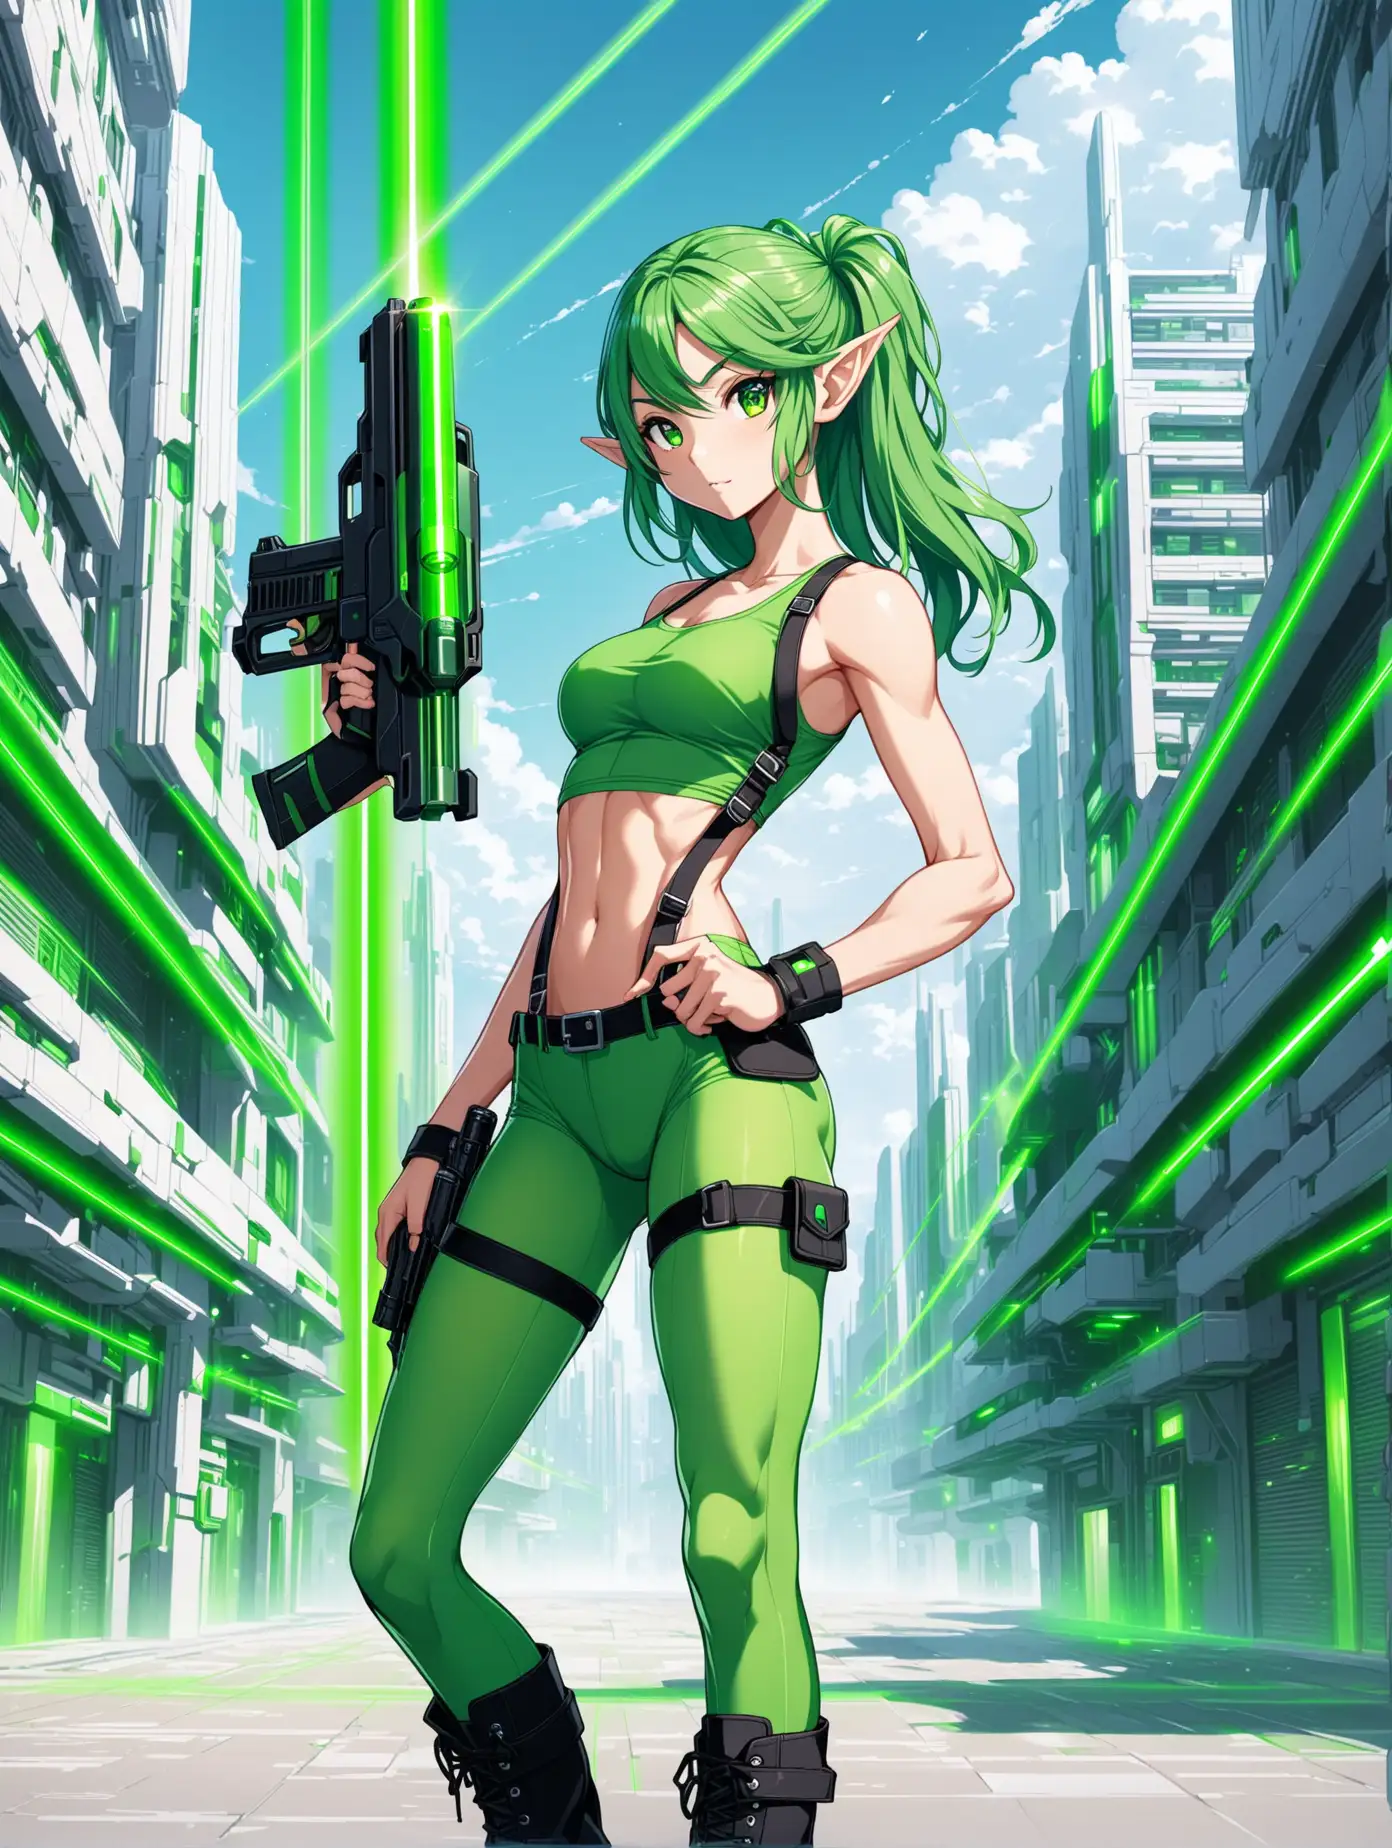 Futuristic Heroine with Green Laser Gun in Minimalist Urban Setting